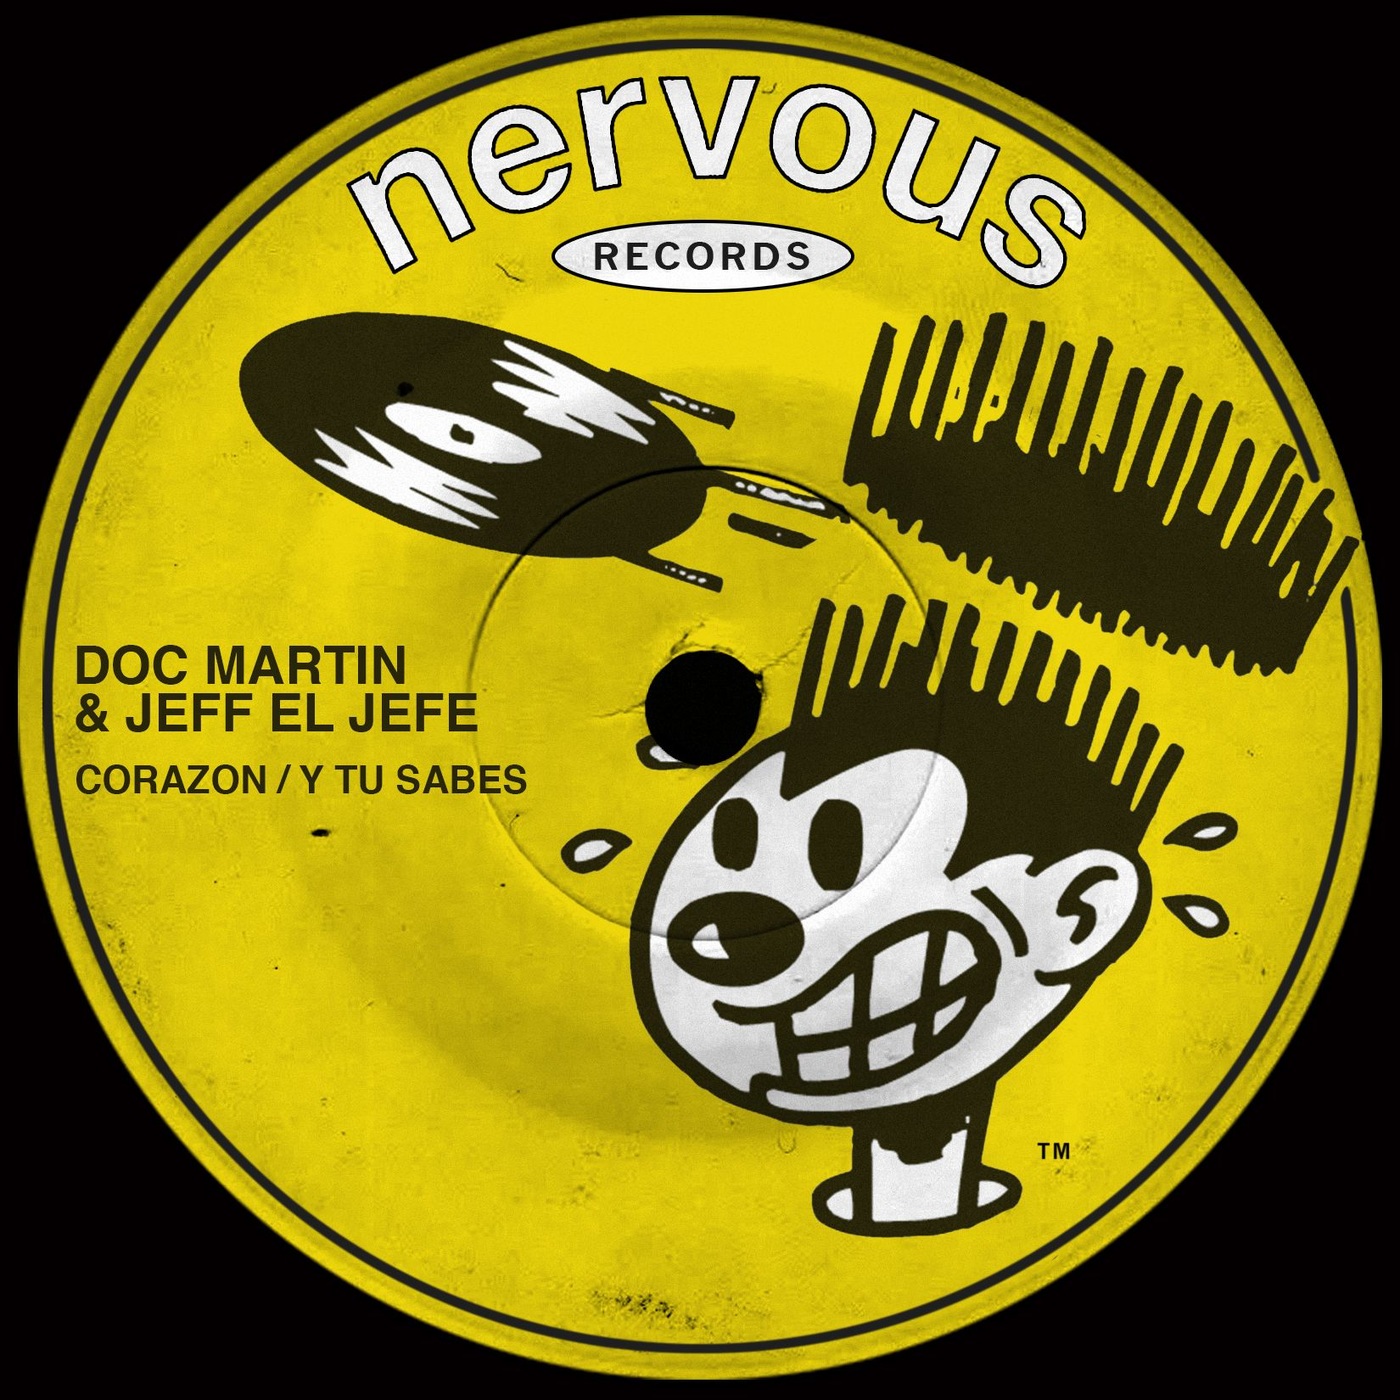 Doc Martin & Jeff El Jefe - Corazon / Y Tu Sabes / Nervous Records